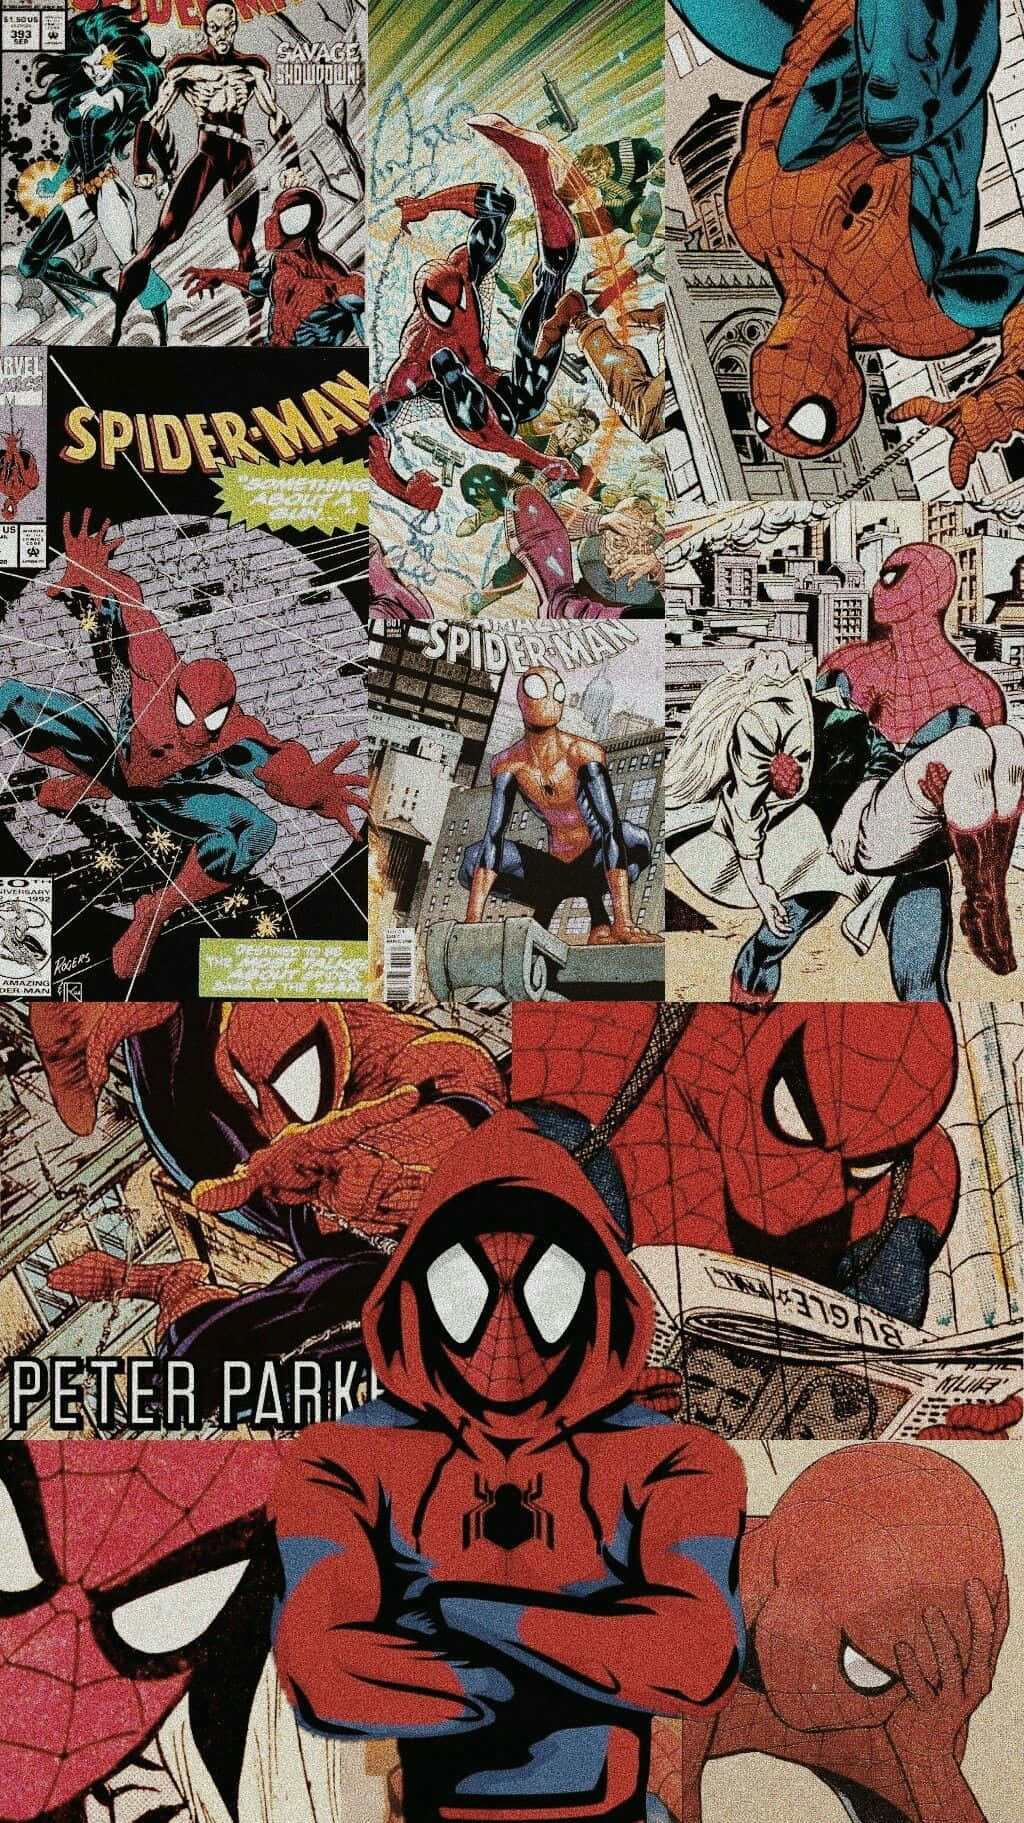 Spider - Man Comics Collage Wallpaper